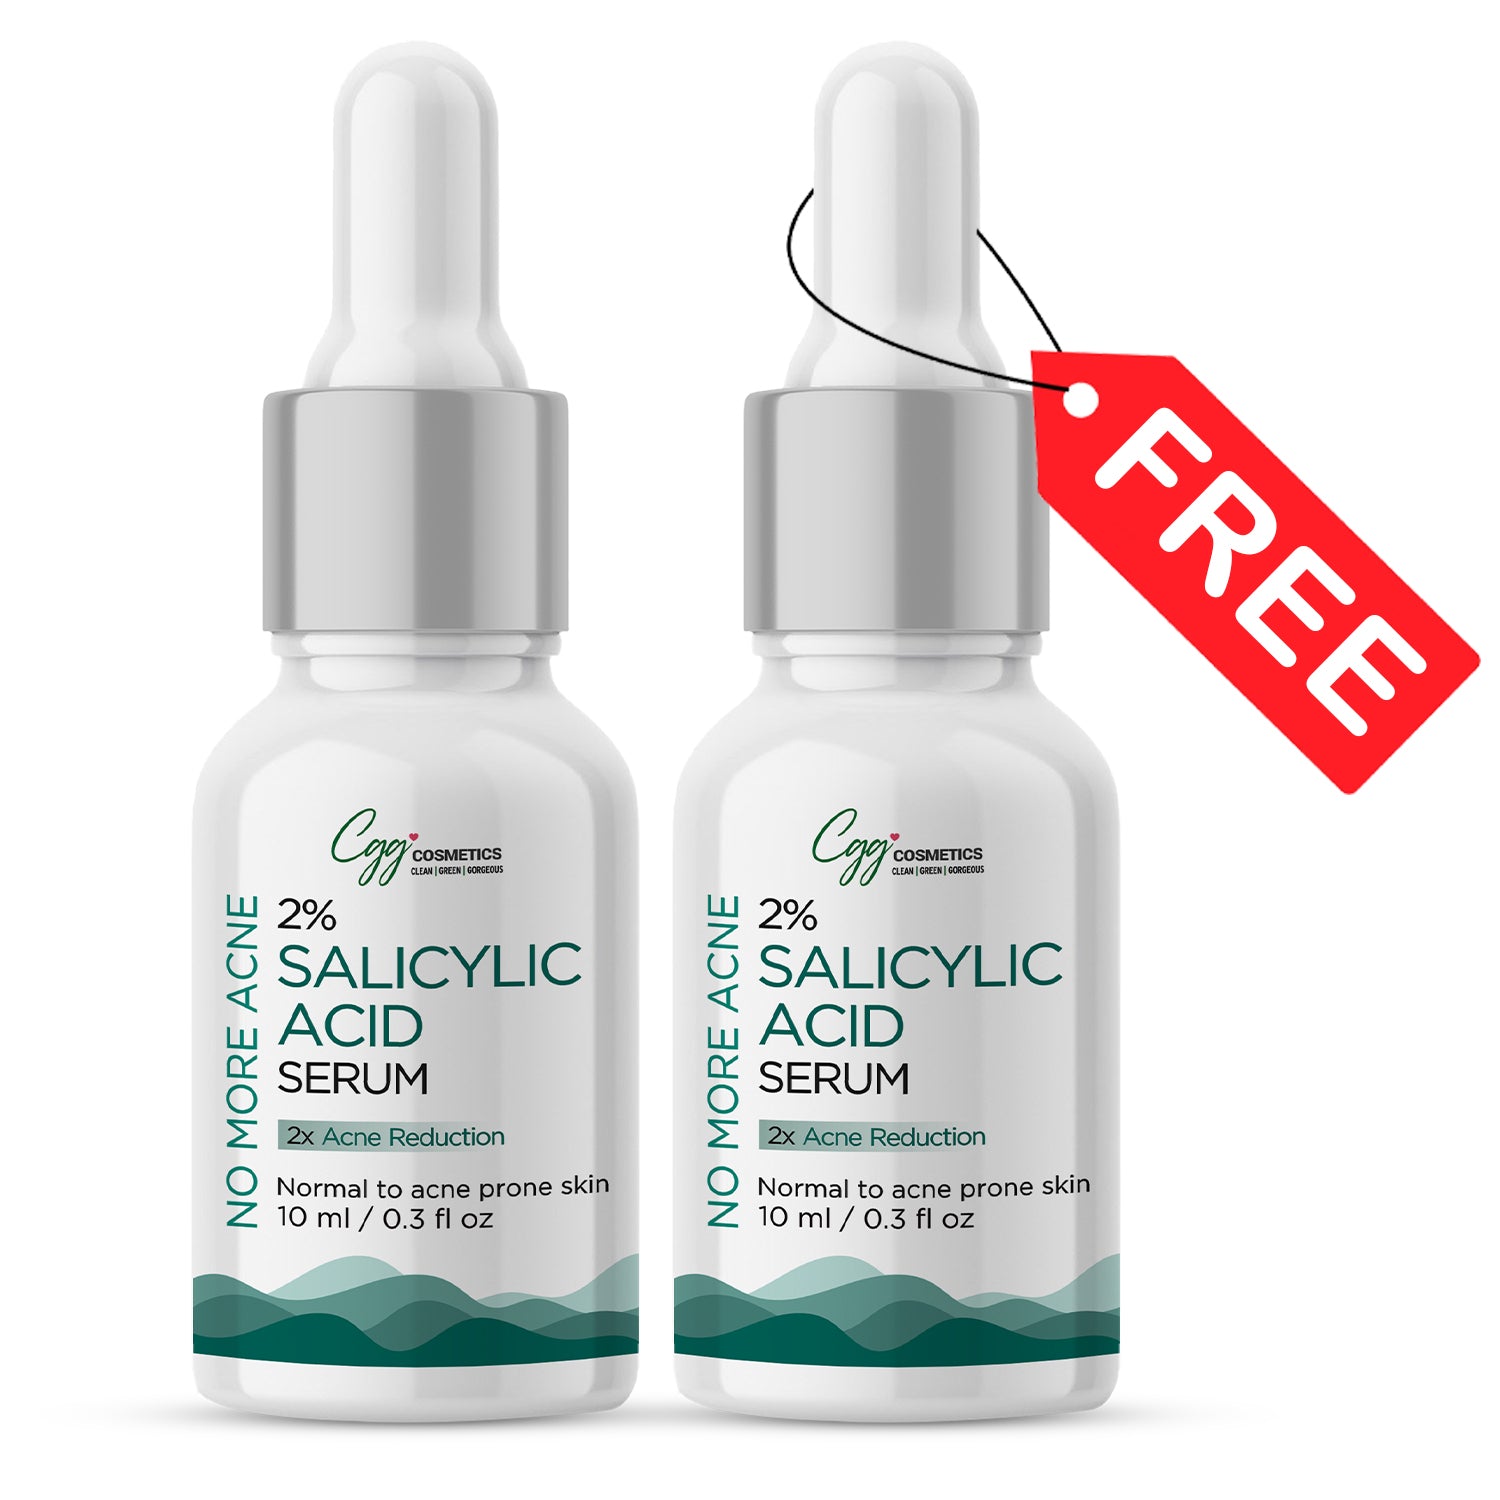 CGG Cosmetics 2% Salicylic Acid Serum 10ml & GET FREE 10ml 2% Salicylic Acid Serum - 2X Acne Reduction